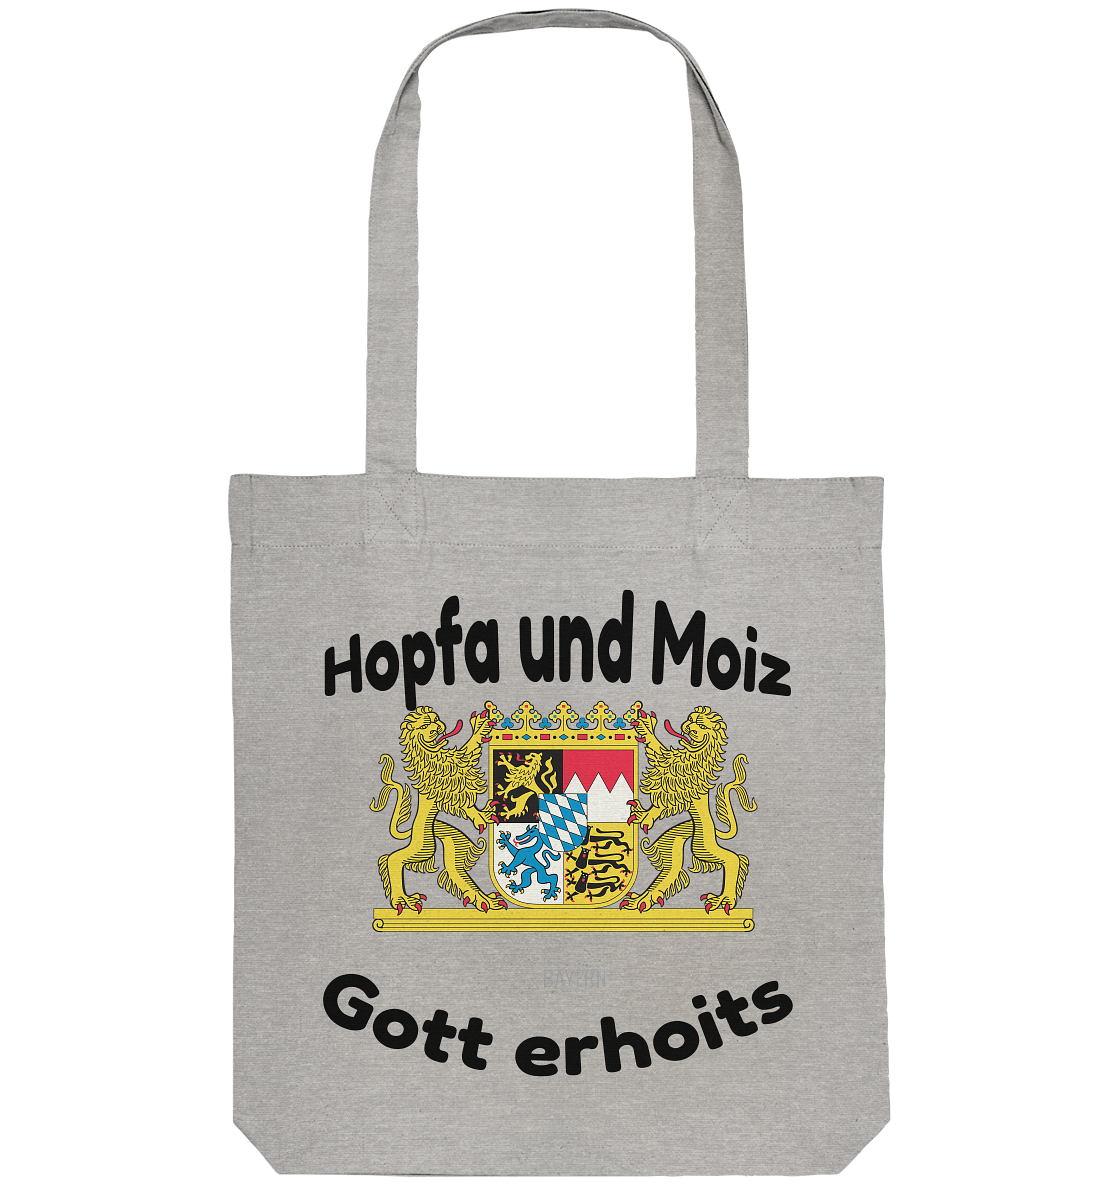 Hopfa und Moiz Gott erhoits  - Organic Tote-Bag